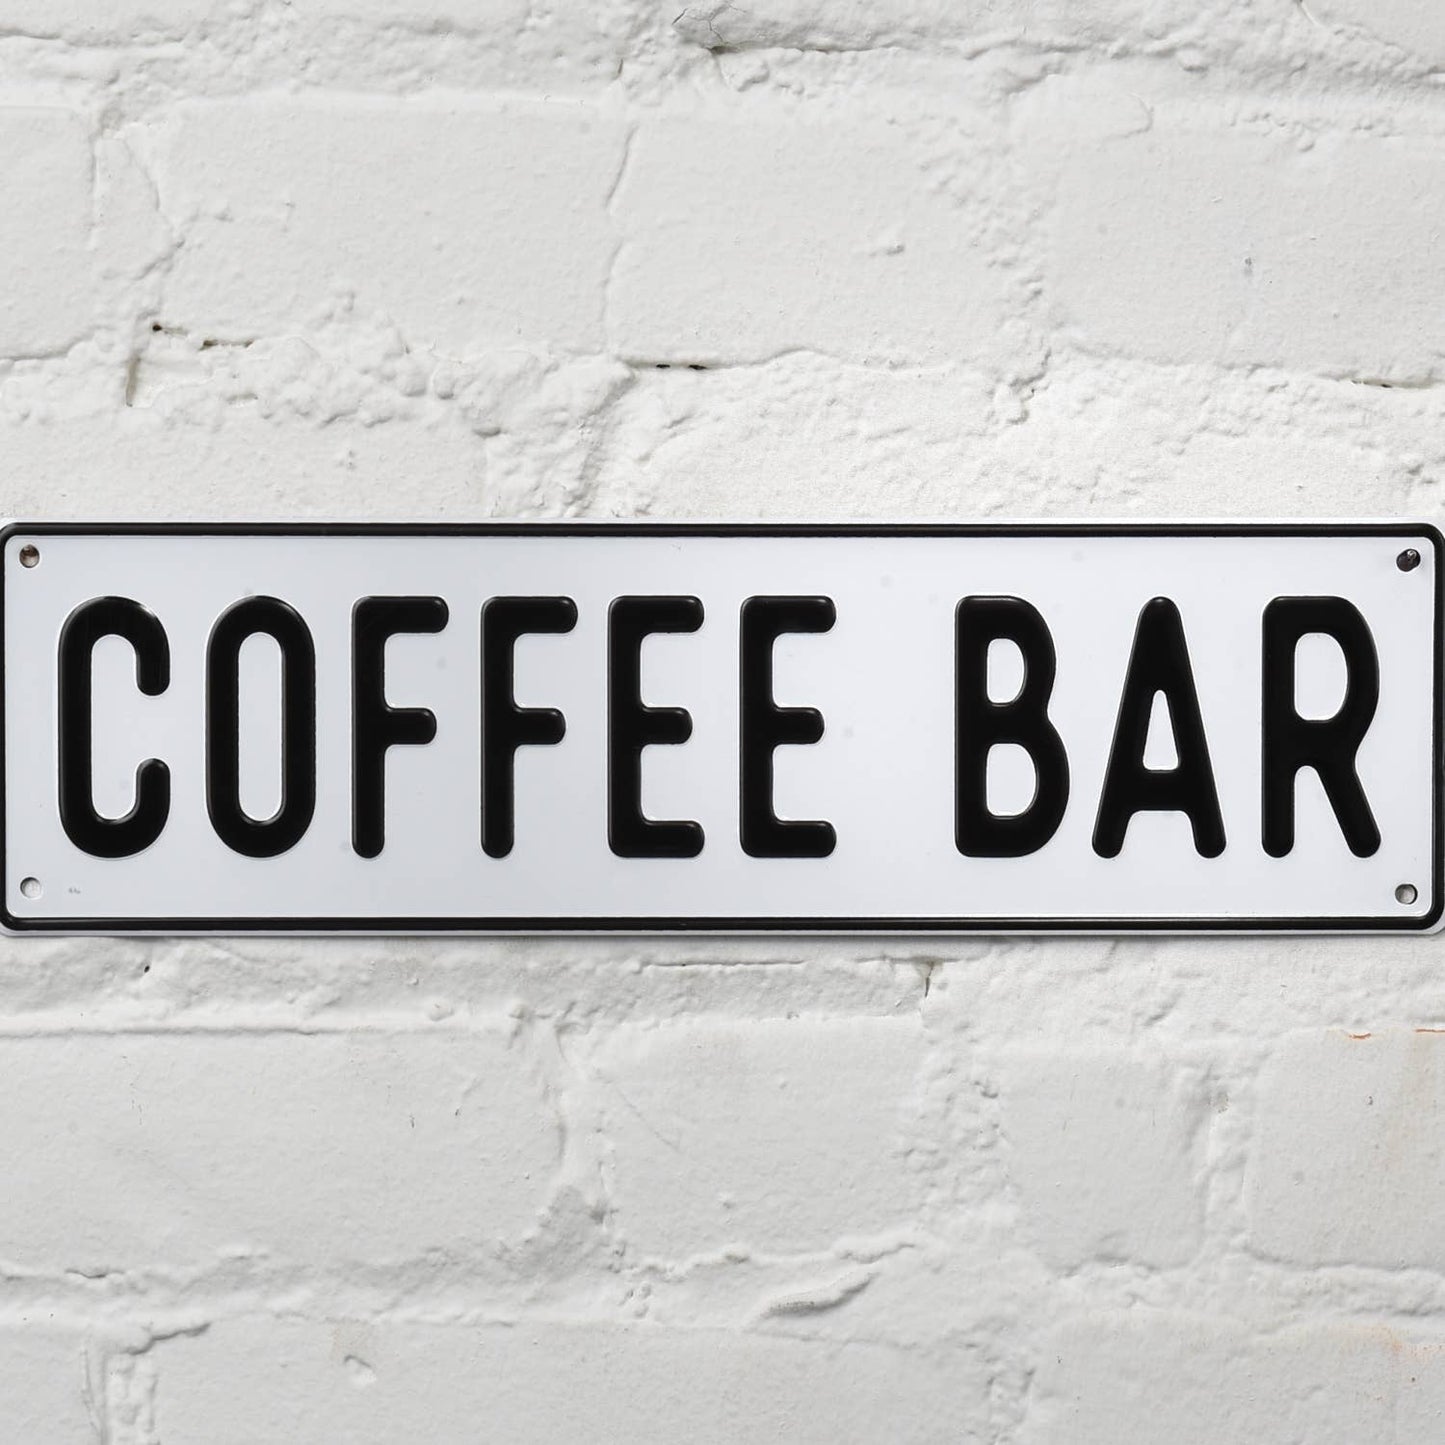 Coffee Bar Aluminum Sign